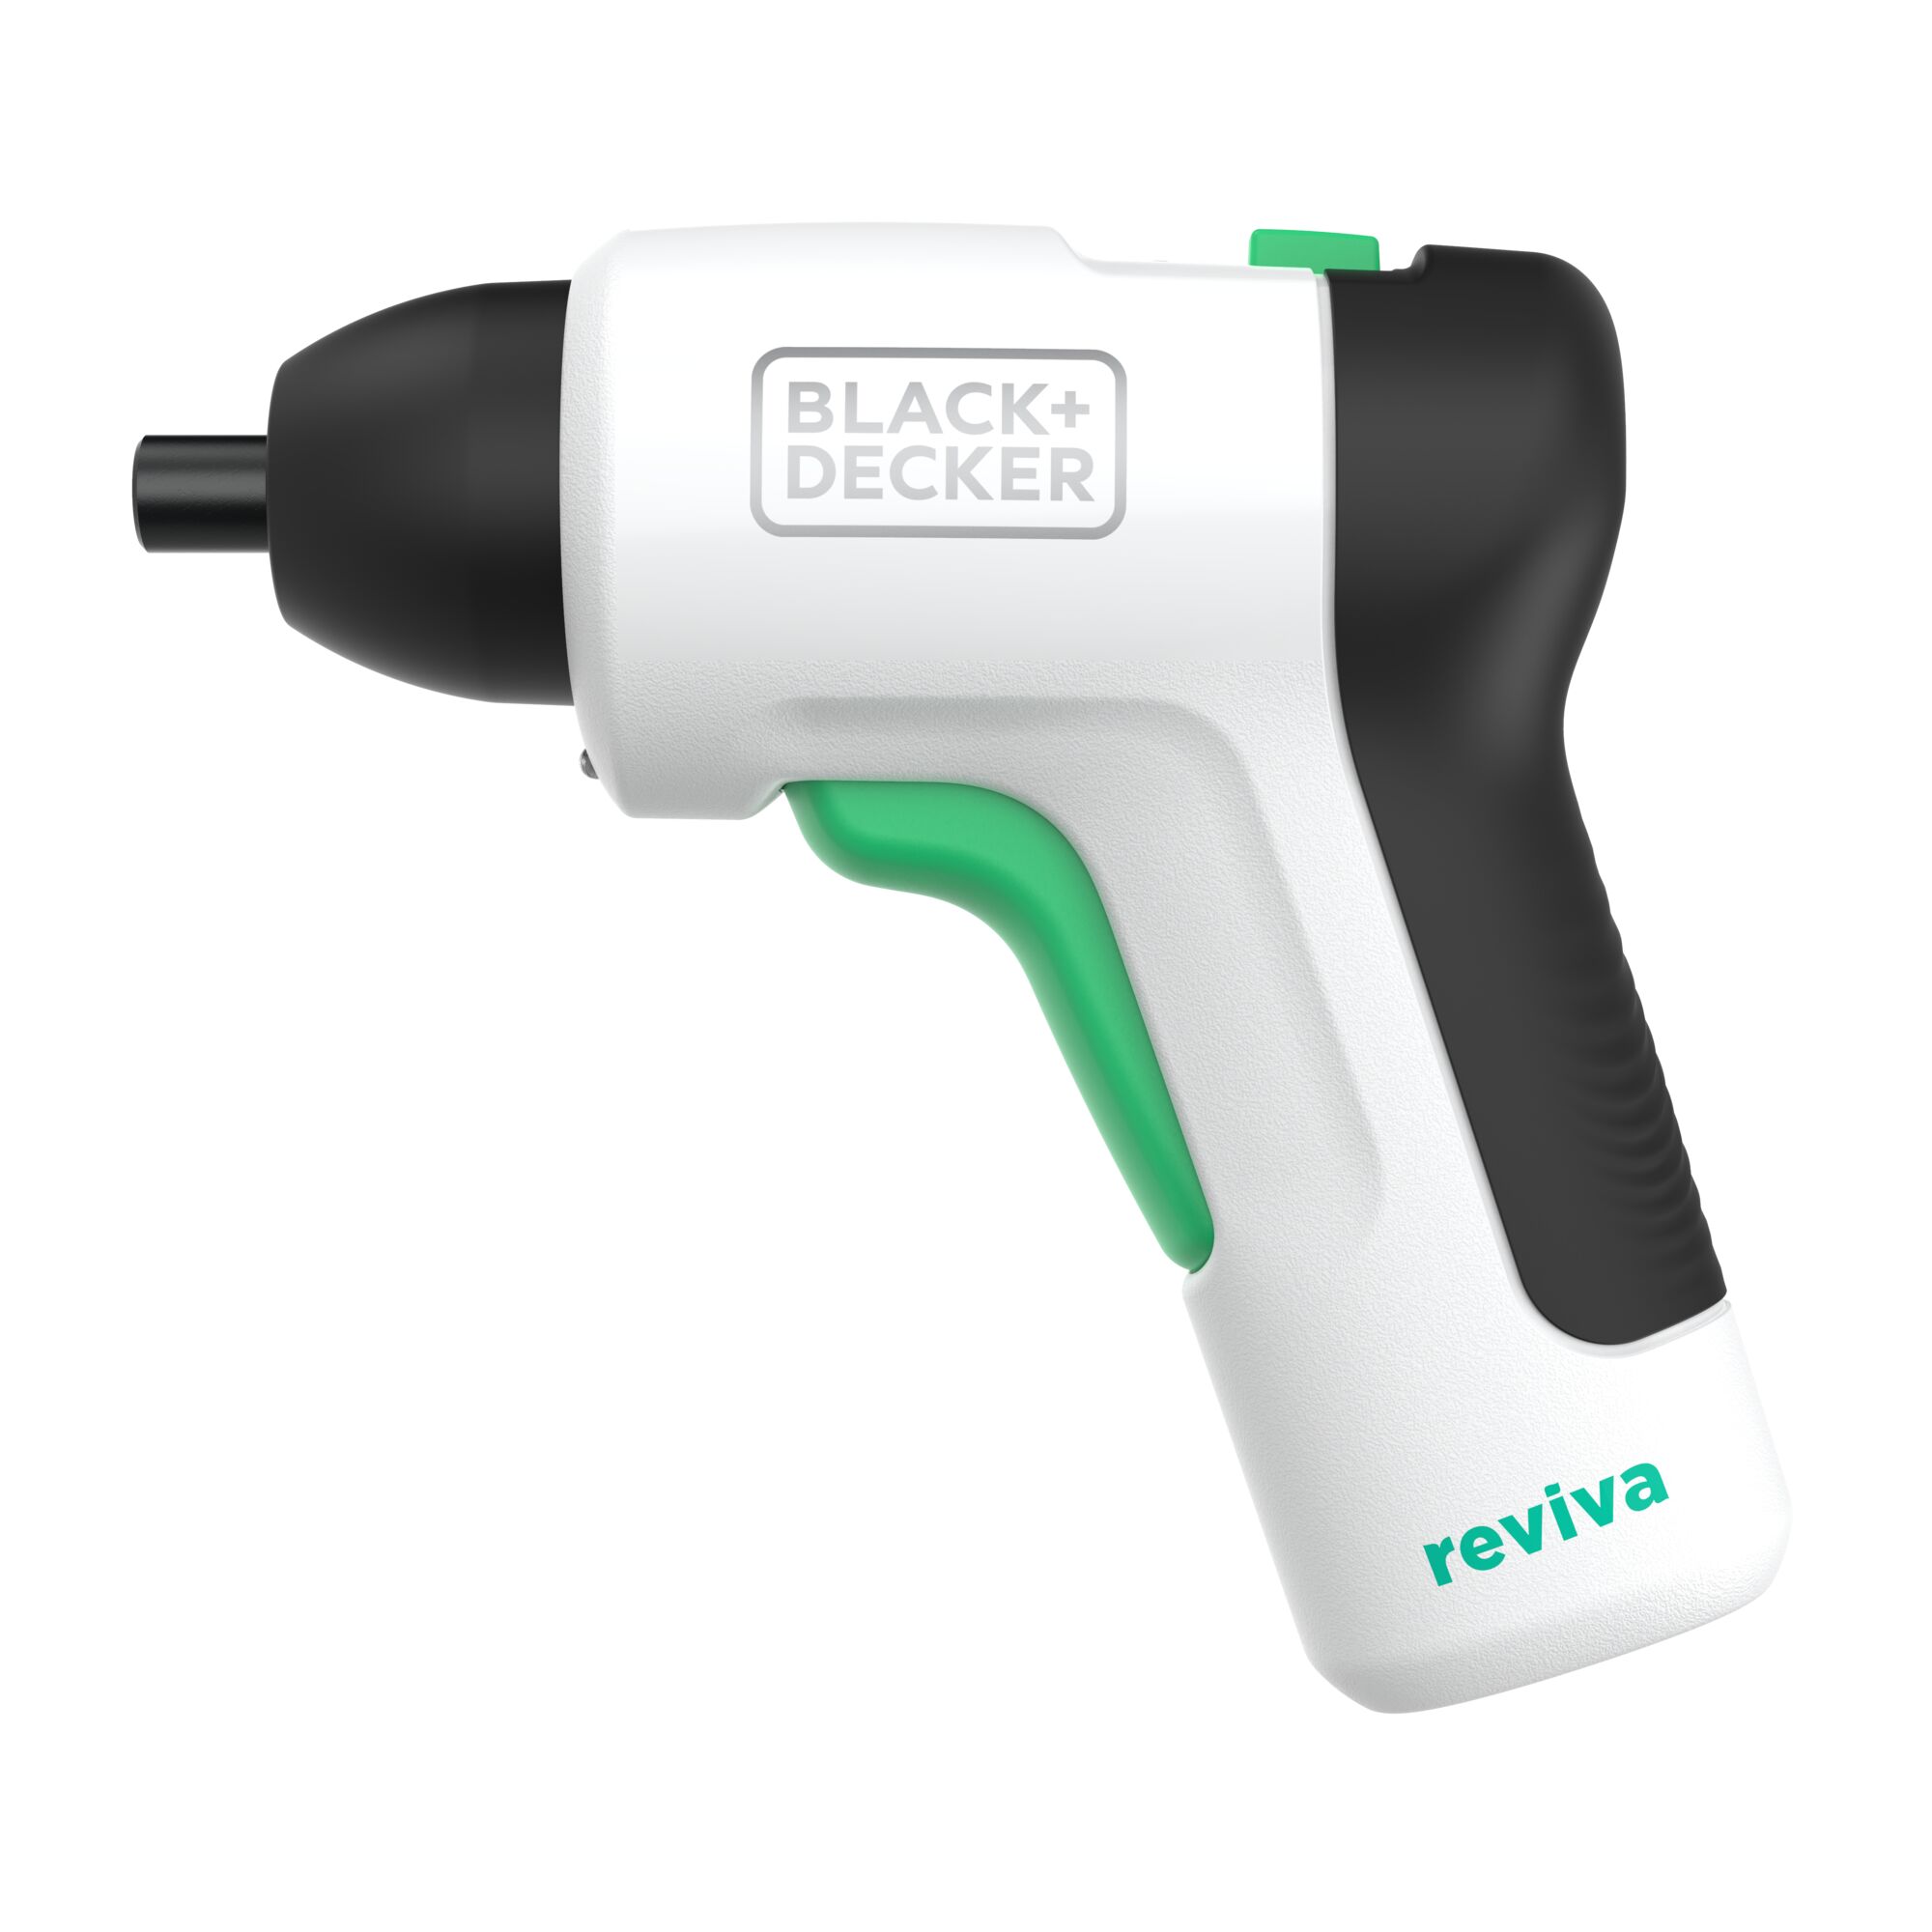 Profile of reviva™ 4V MAX* Screwdriver on a white background.